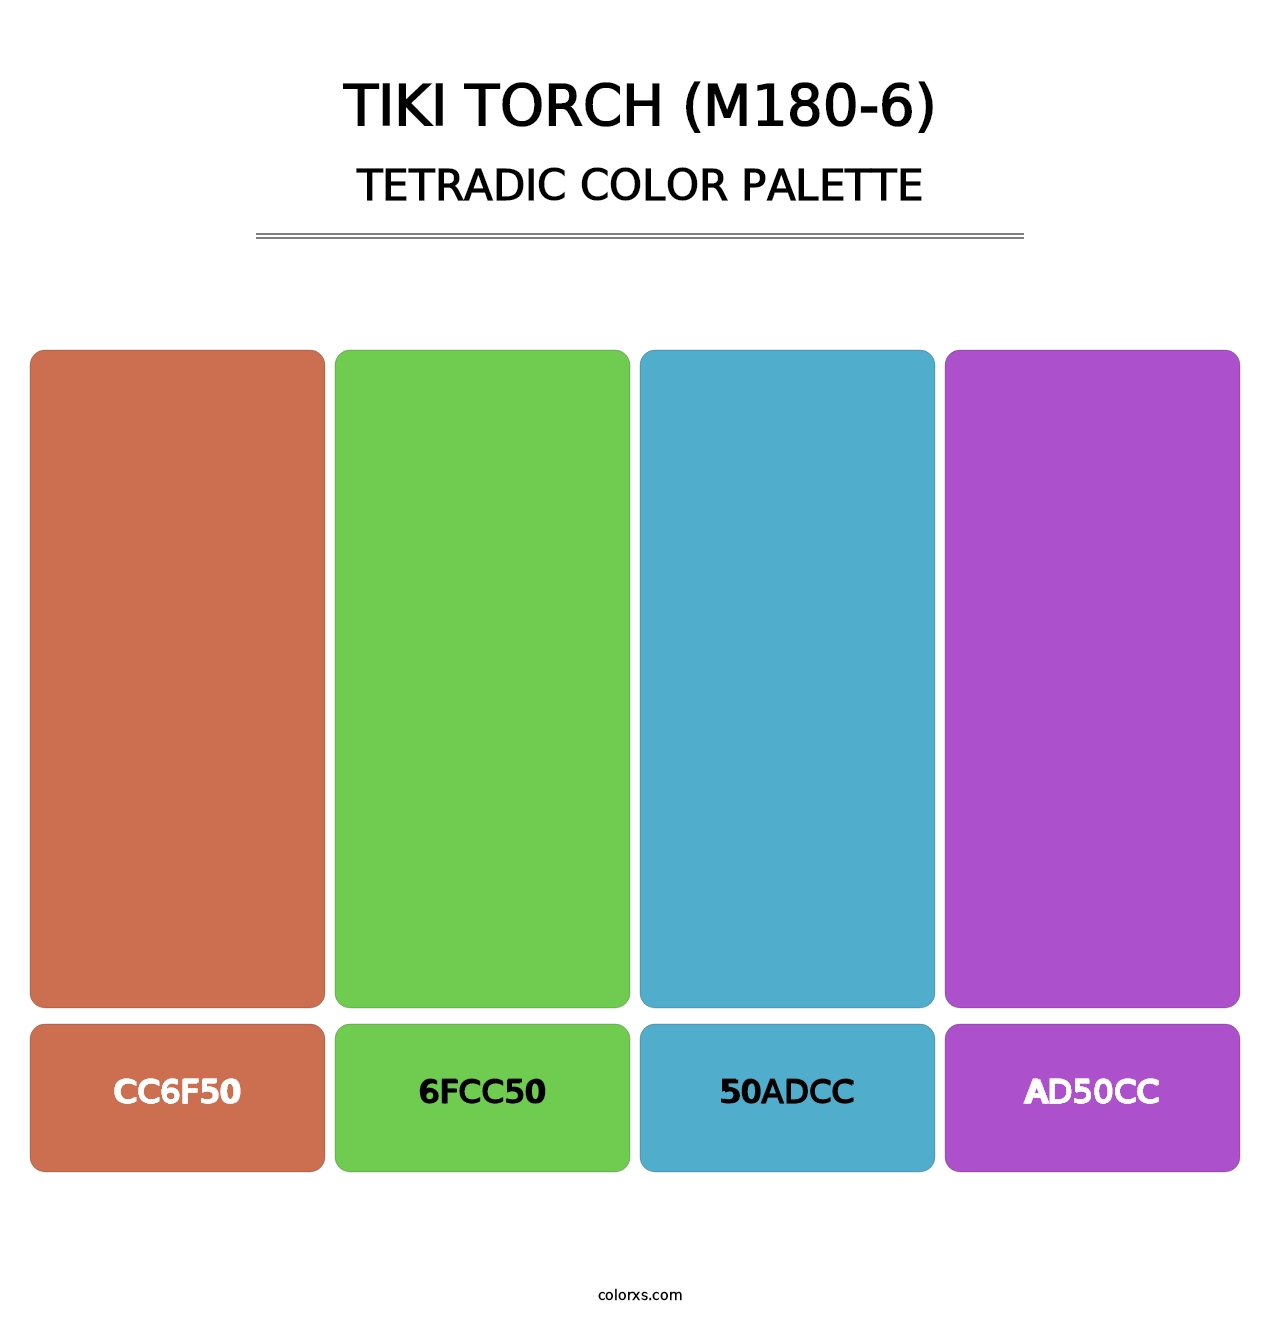 Tiki Torch (M180-6) - Tetradic Color Palette